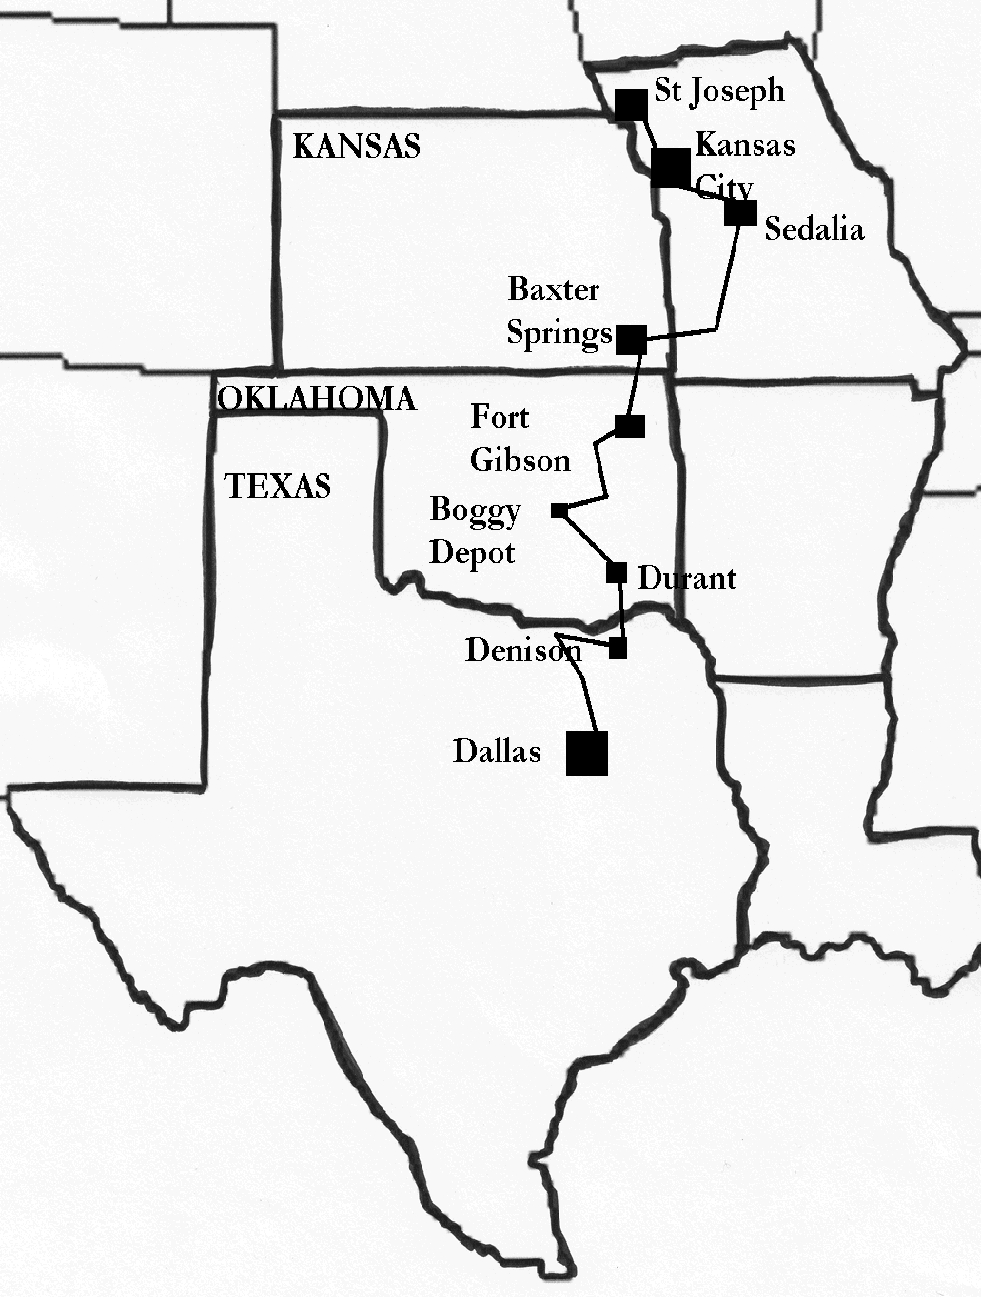 The Shawnee Trail - Texas Forts Trail Map